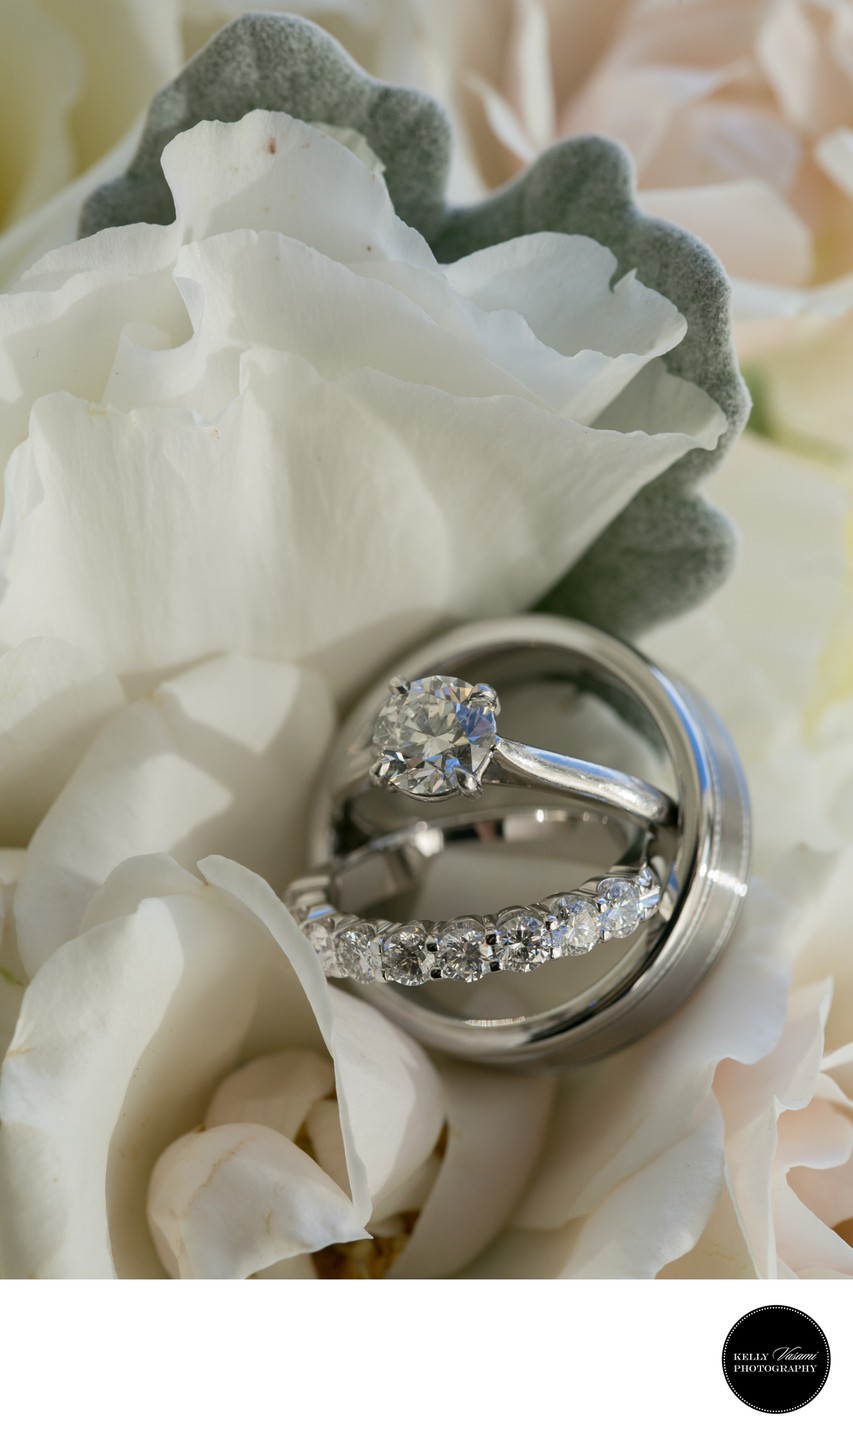 Wedding rings, rose petals, dusty miller